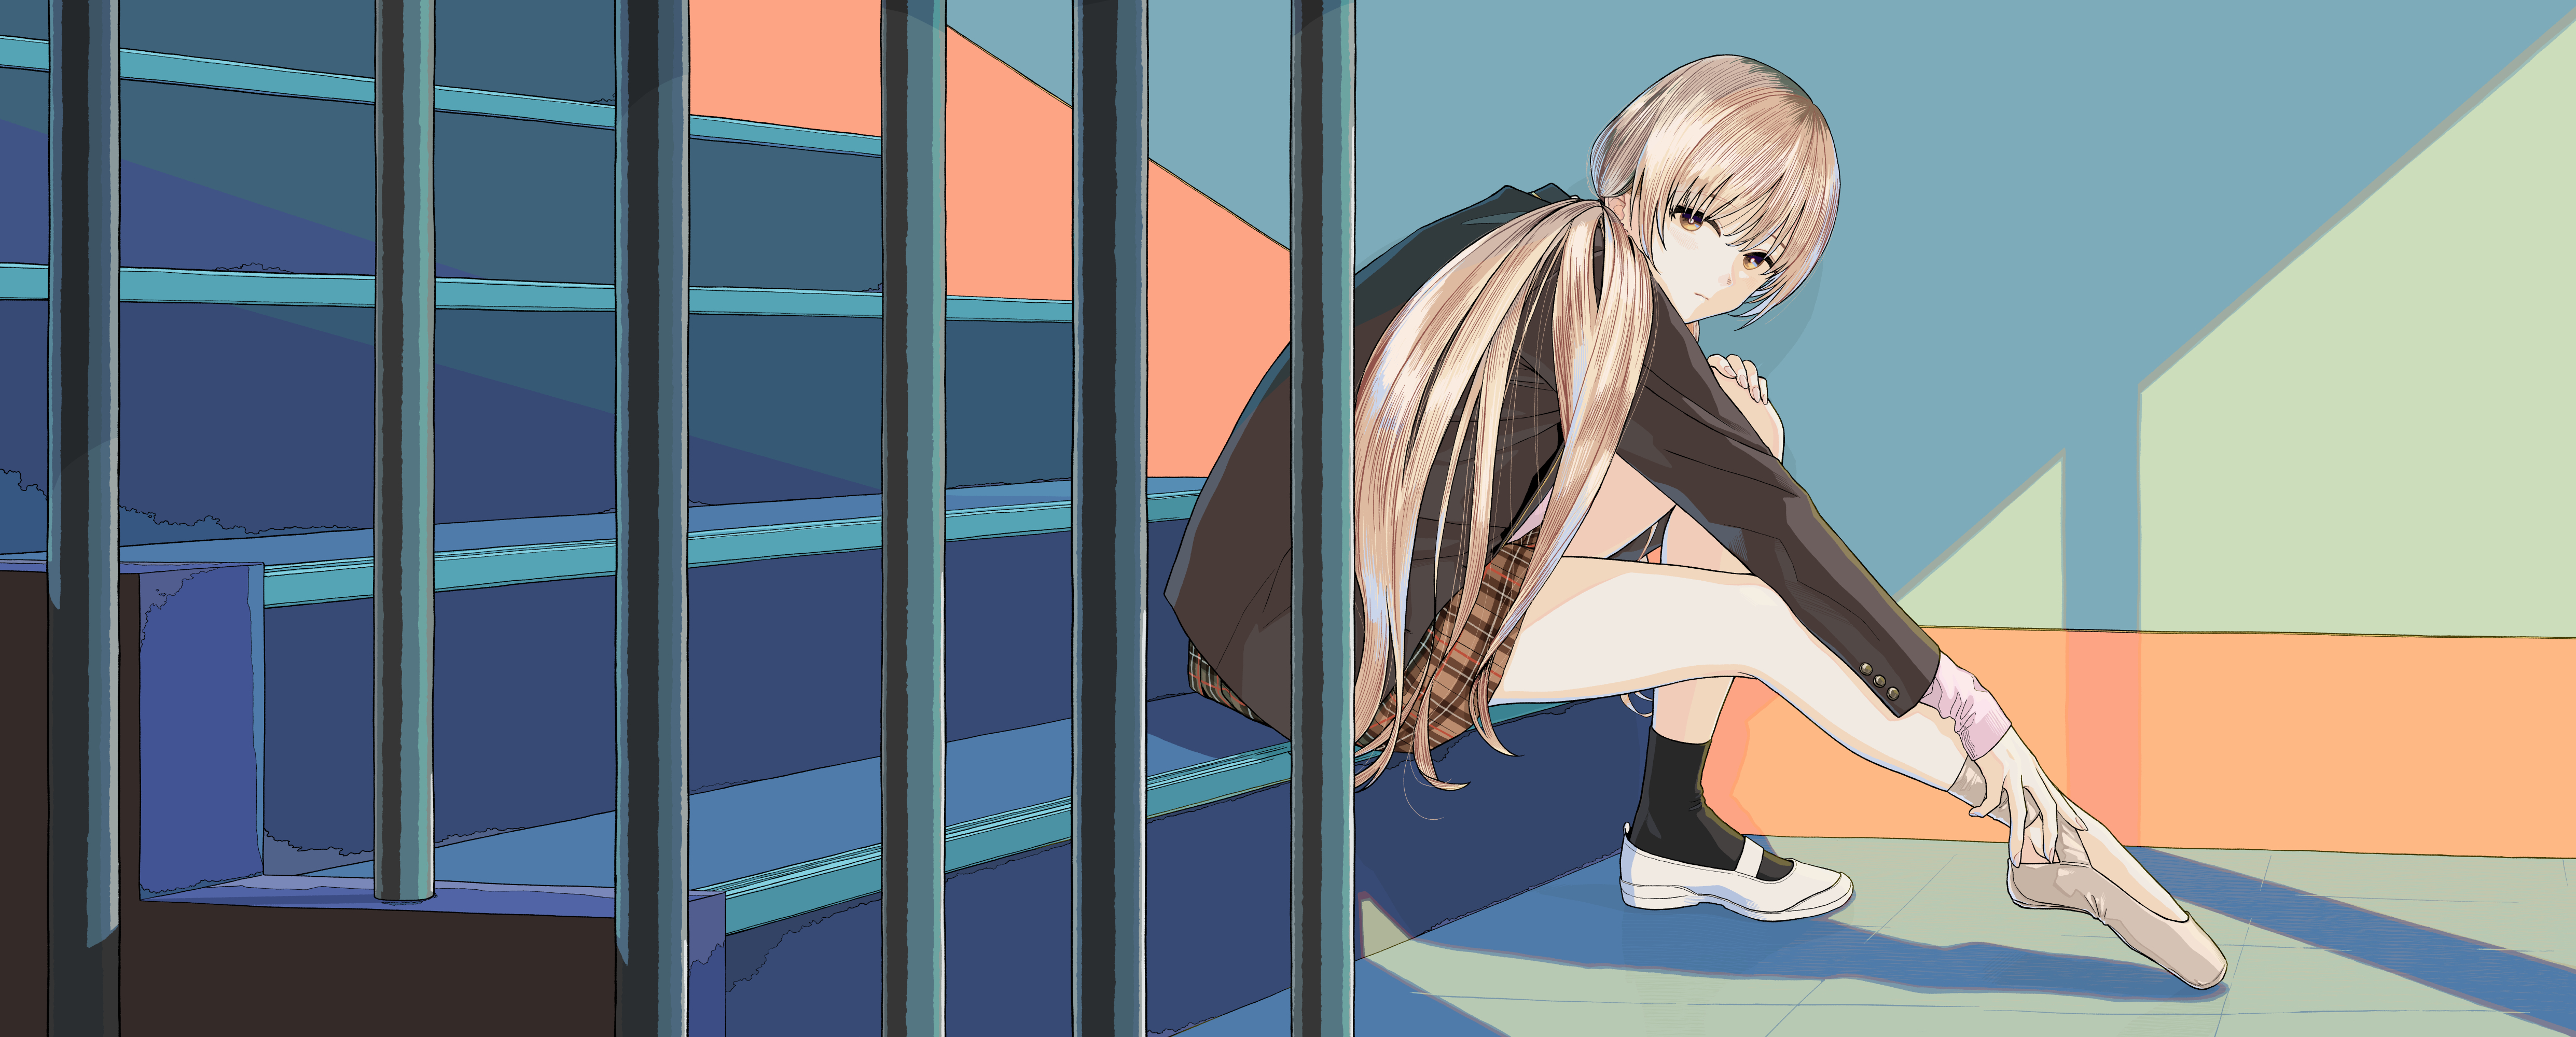 Anime Anime Girls Blonde Long Hair Stairs Skirt Socks Brown Eyes Jacket Ballerina Light Effects Look 4966x2000